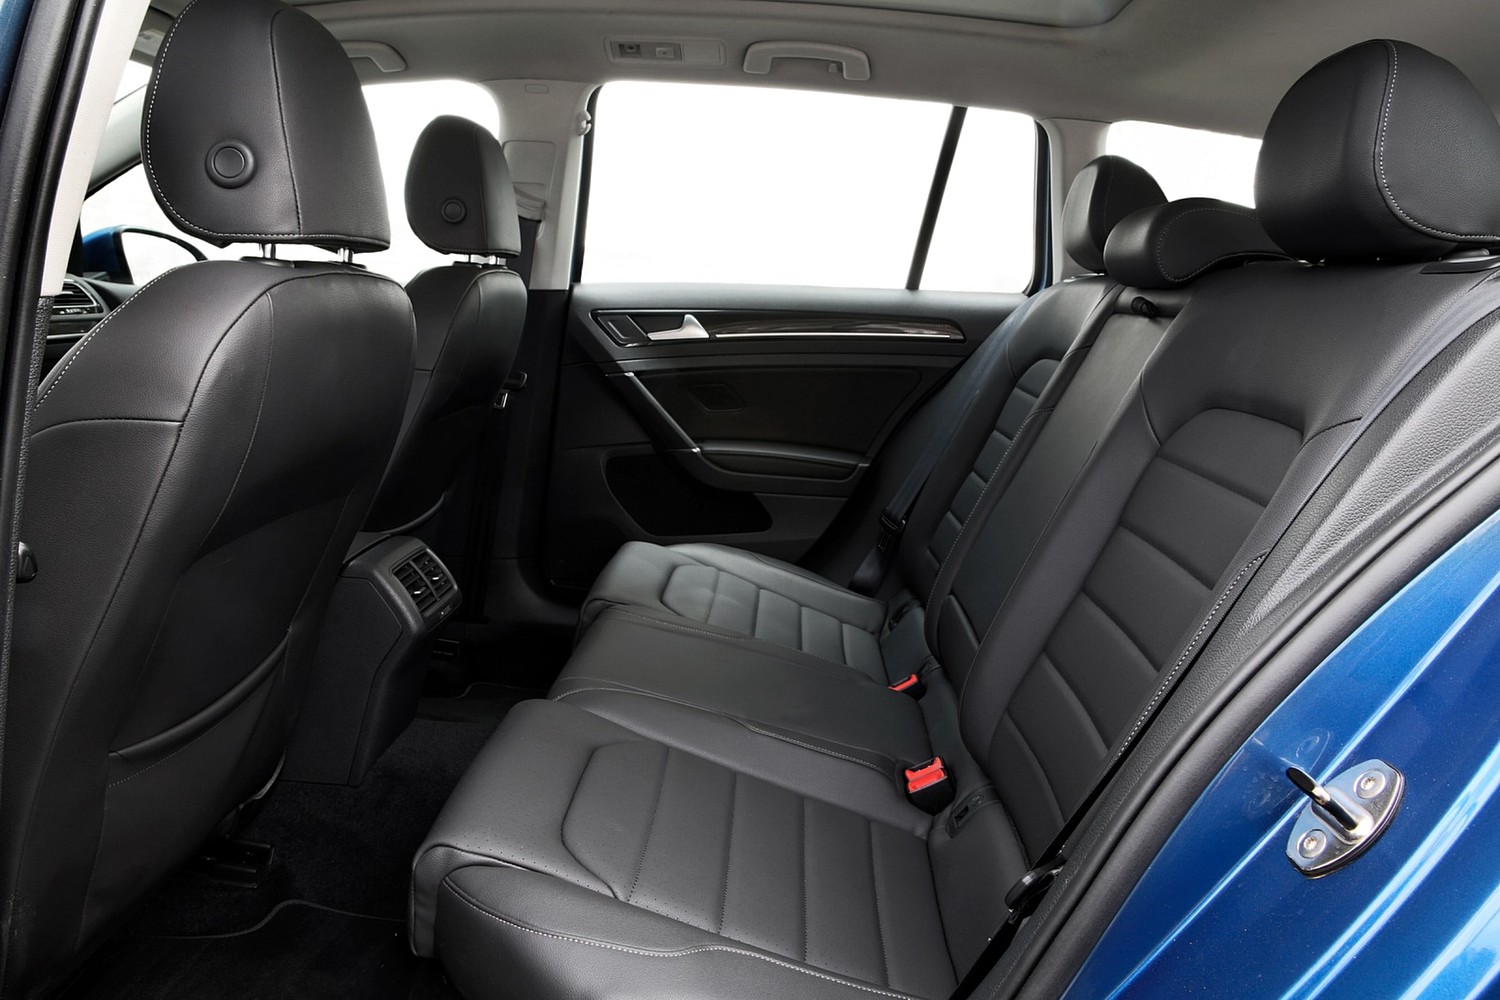 Volkswagen Golf SportWagen TSI SEL Wagon Rear Interior Shown (2015 model year shown)